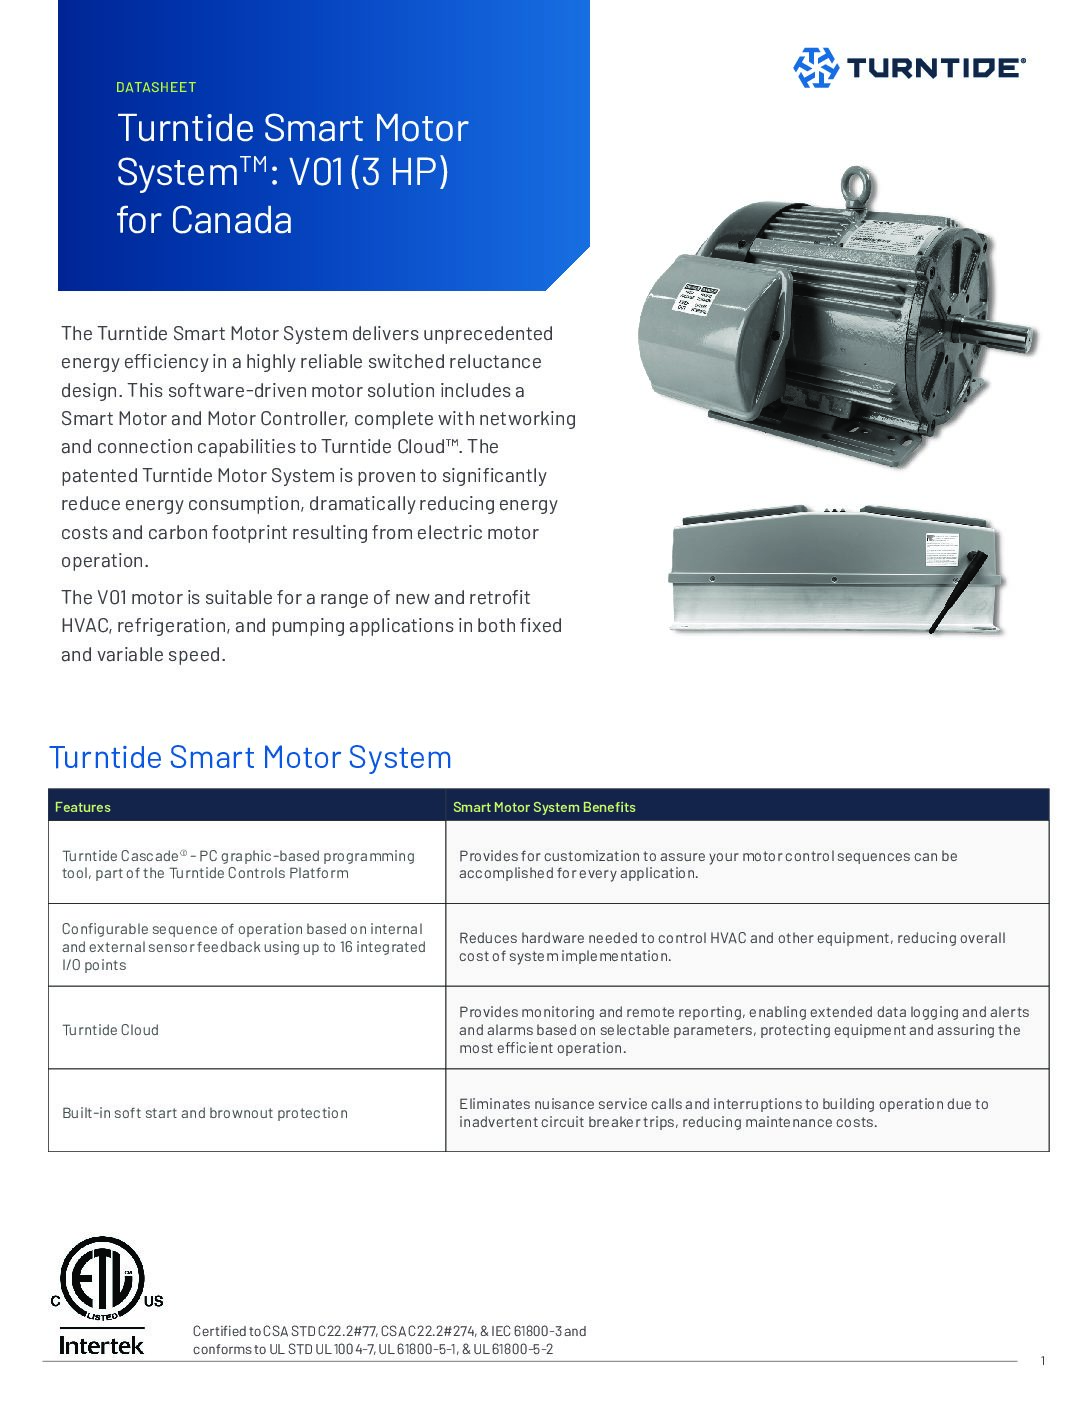 Turntide Smart Motor System: V01 (3HP) for Canada Asset Cover